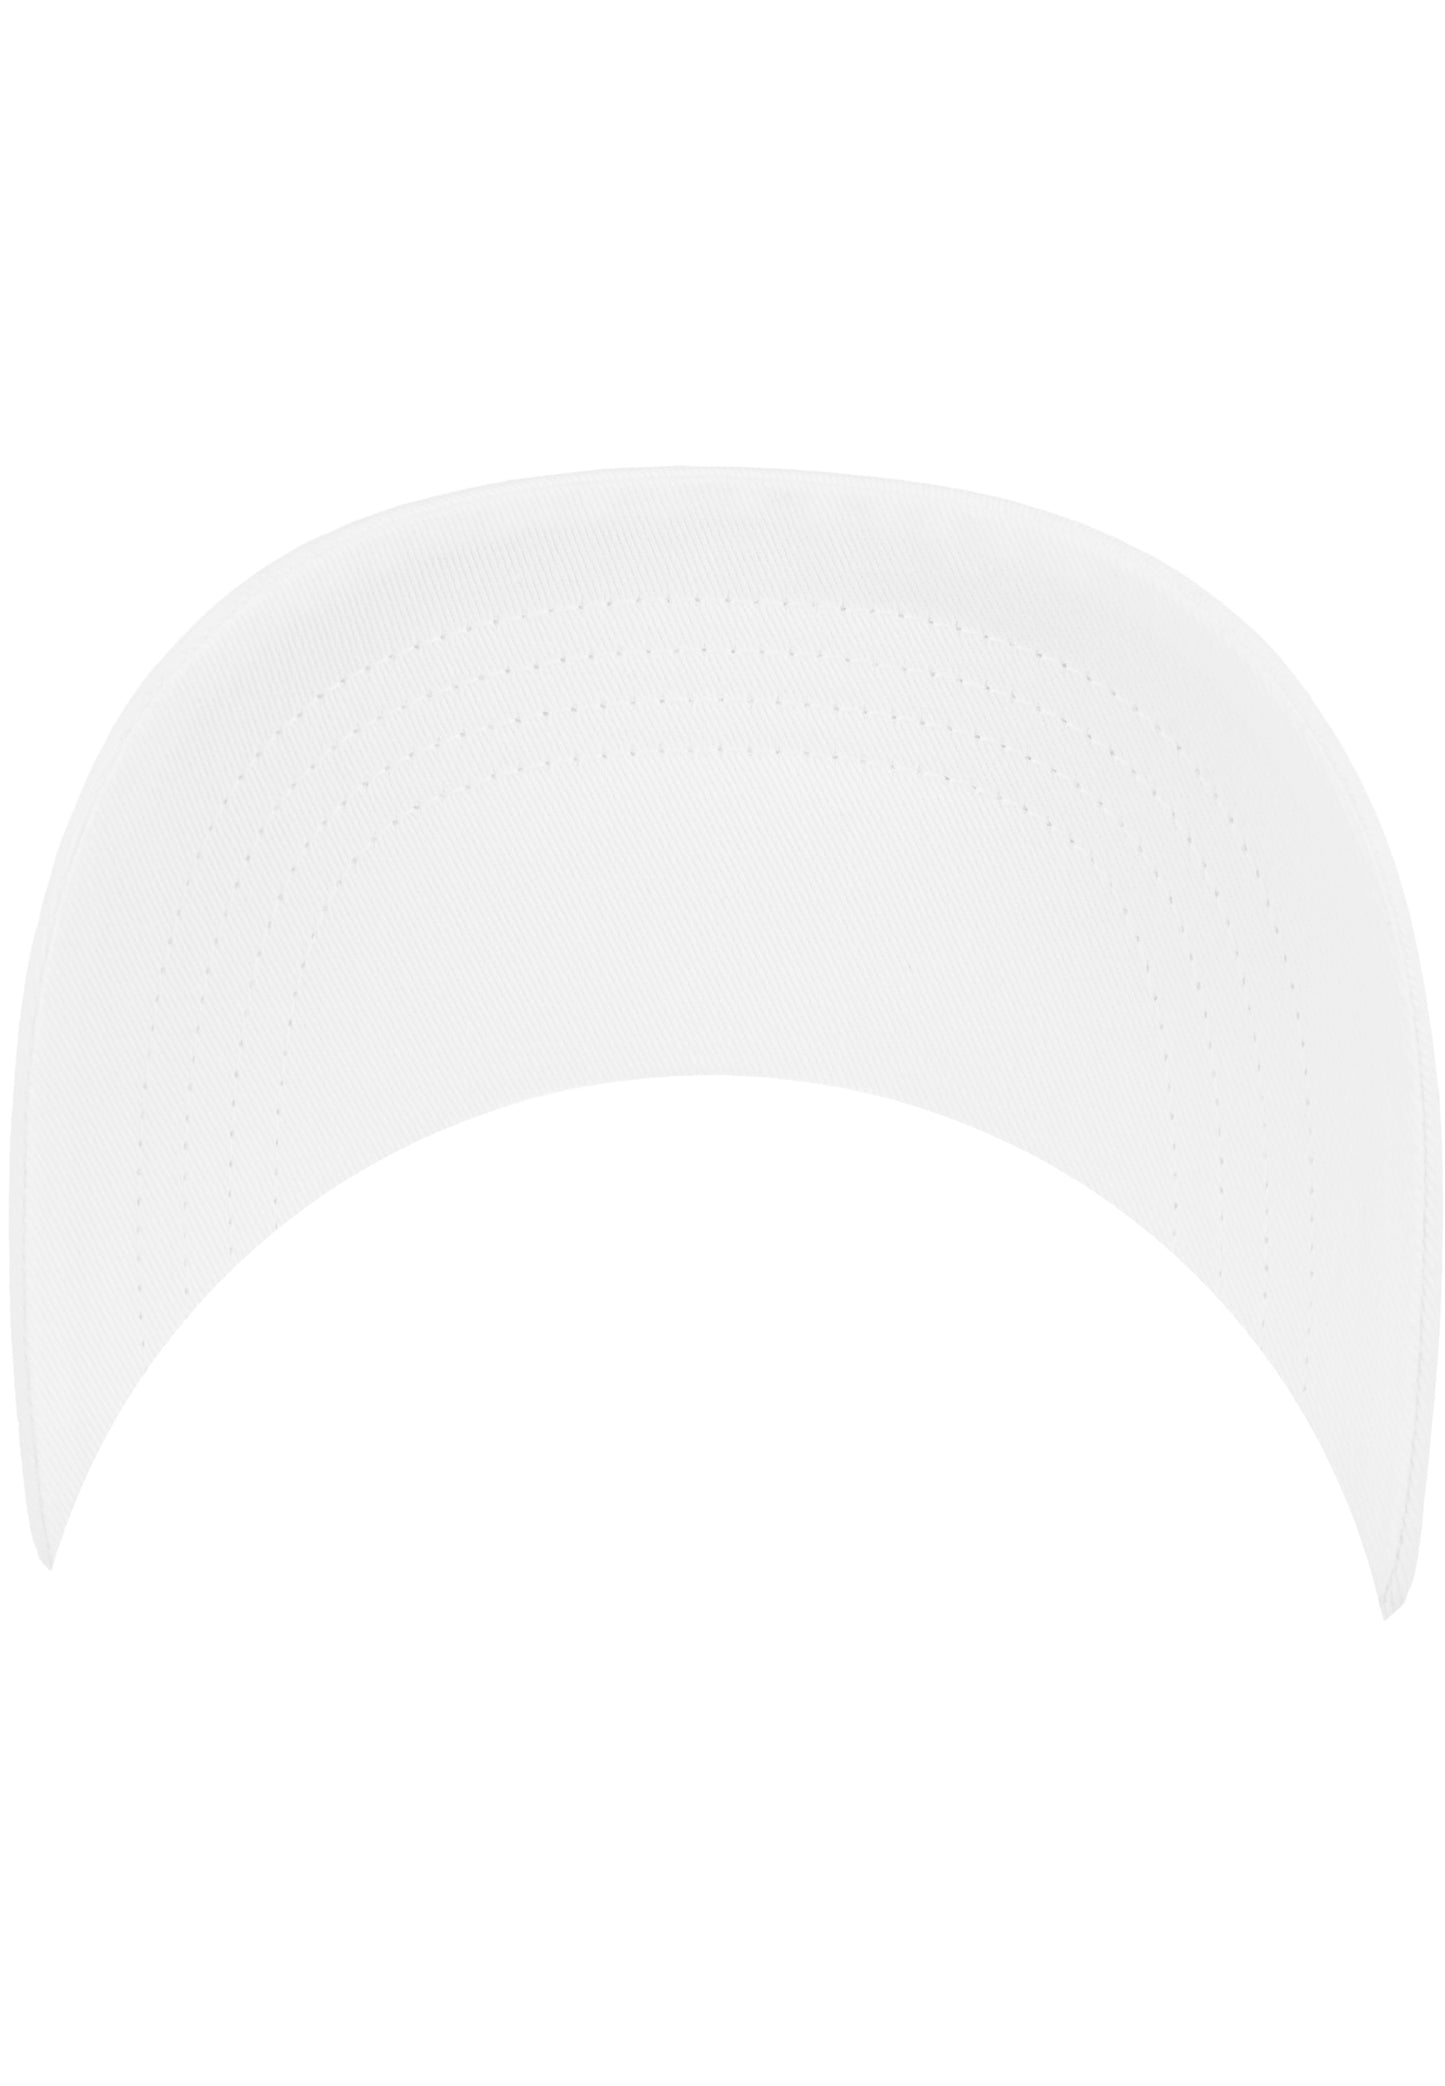 Low Profile Cotton Twill - White - Headz Up 